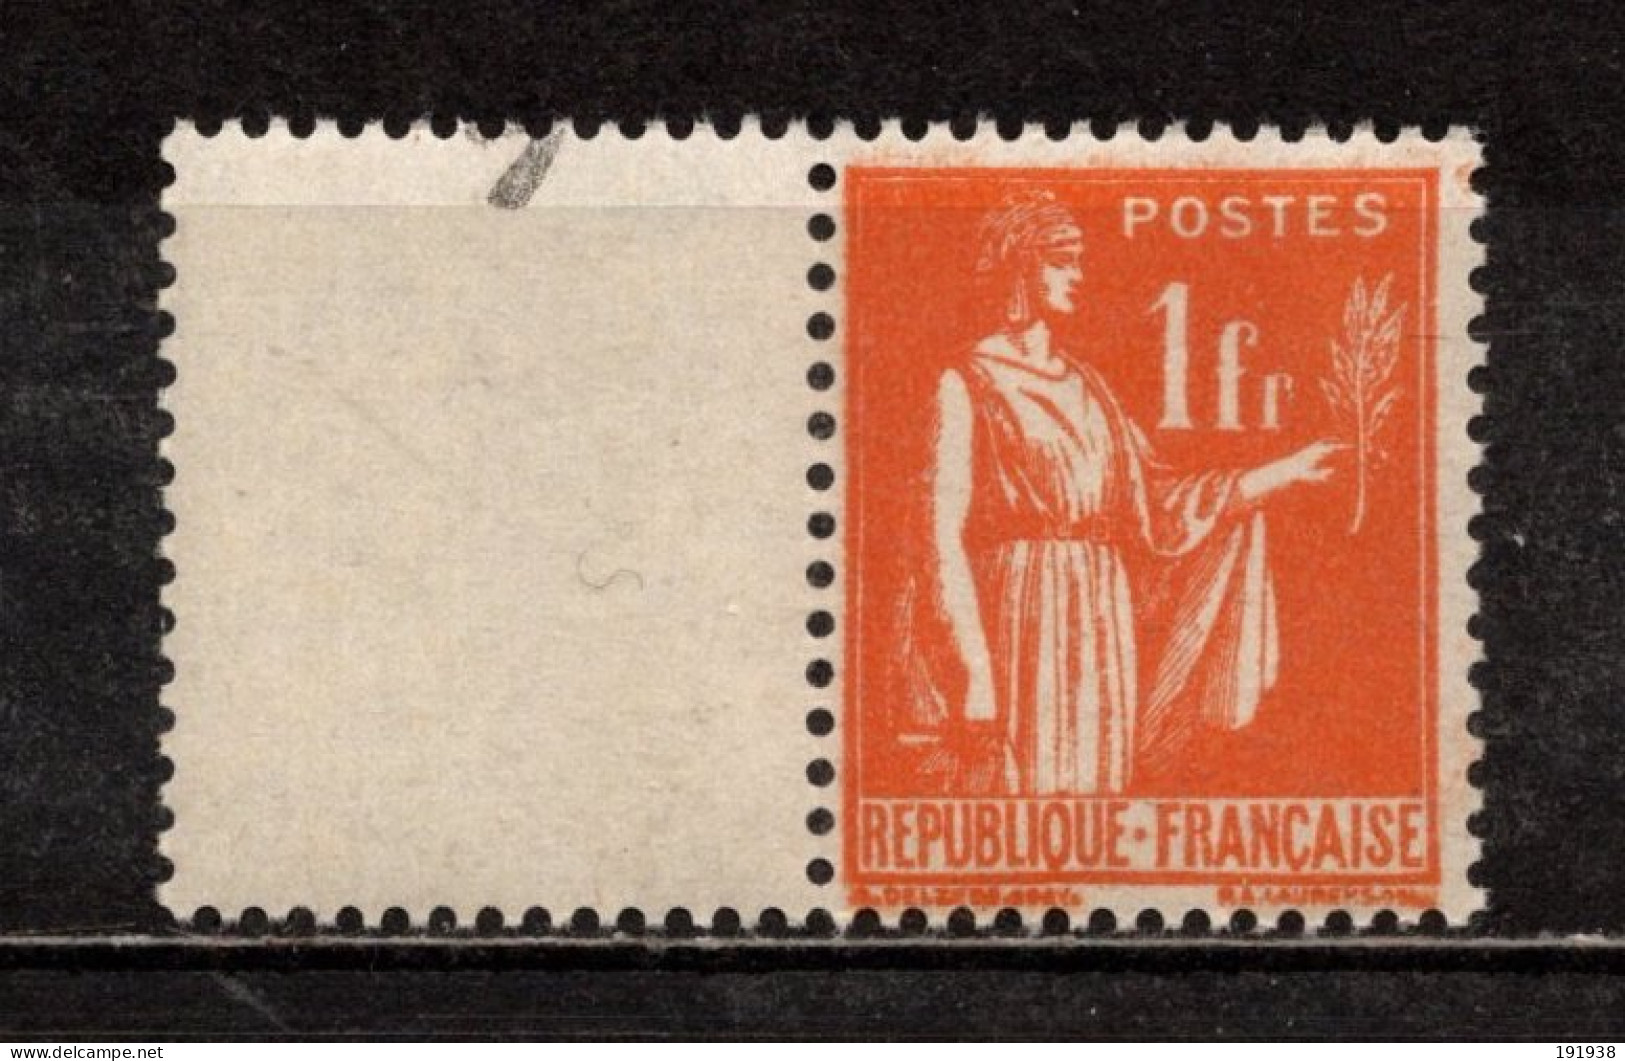 France N° 286**, Bdf, Luxe, Cote 8,00 € - 1932-39 Paix